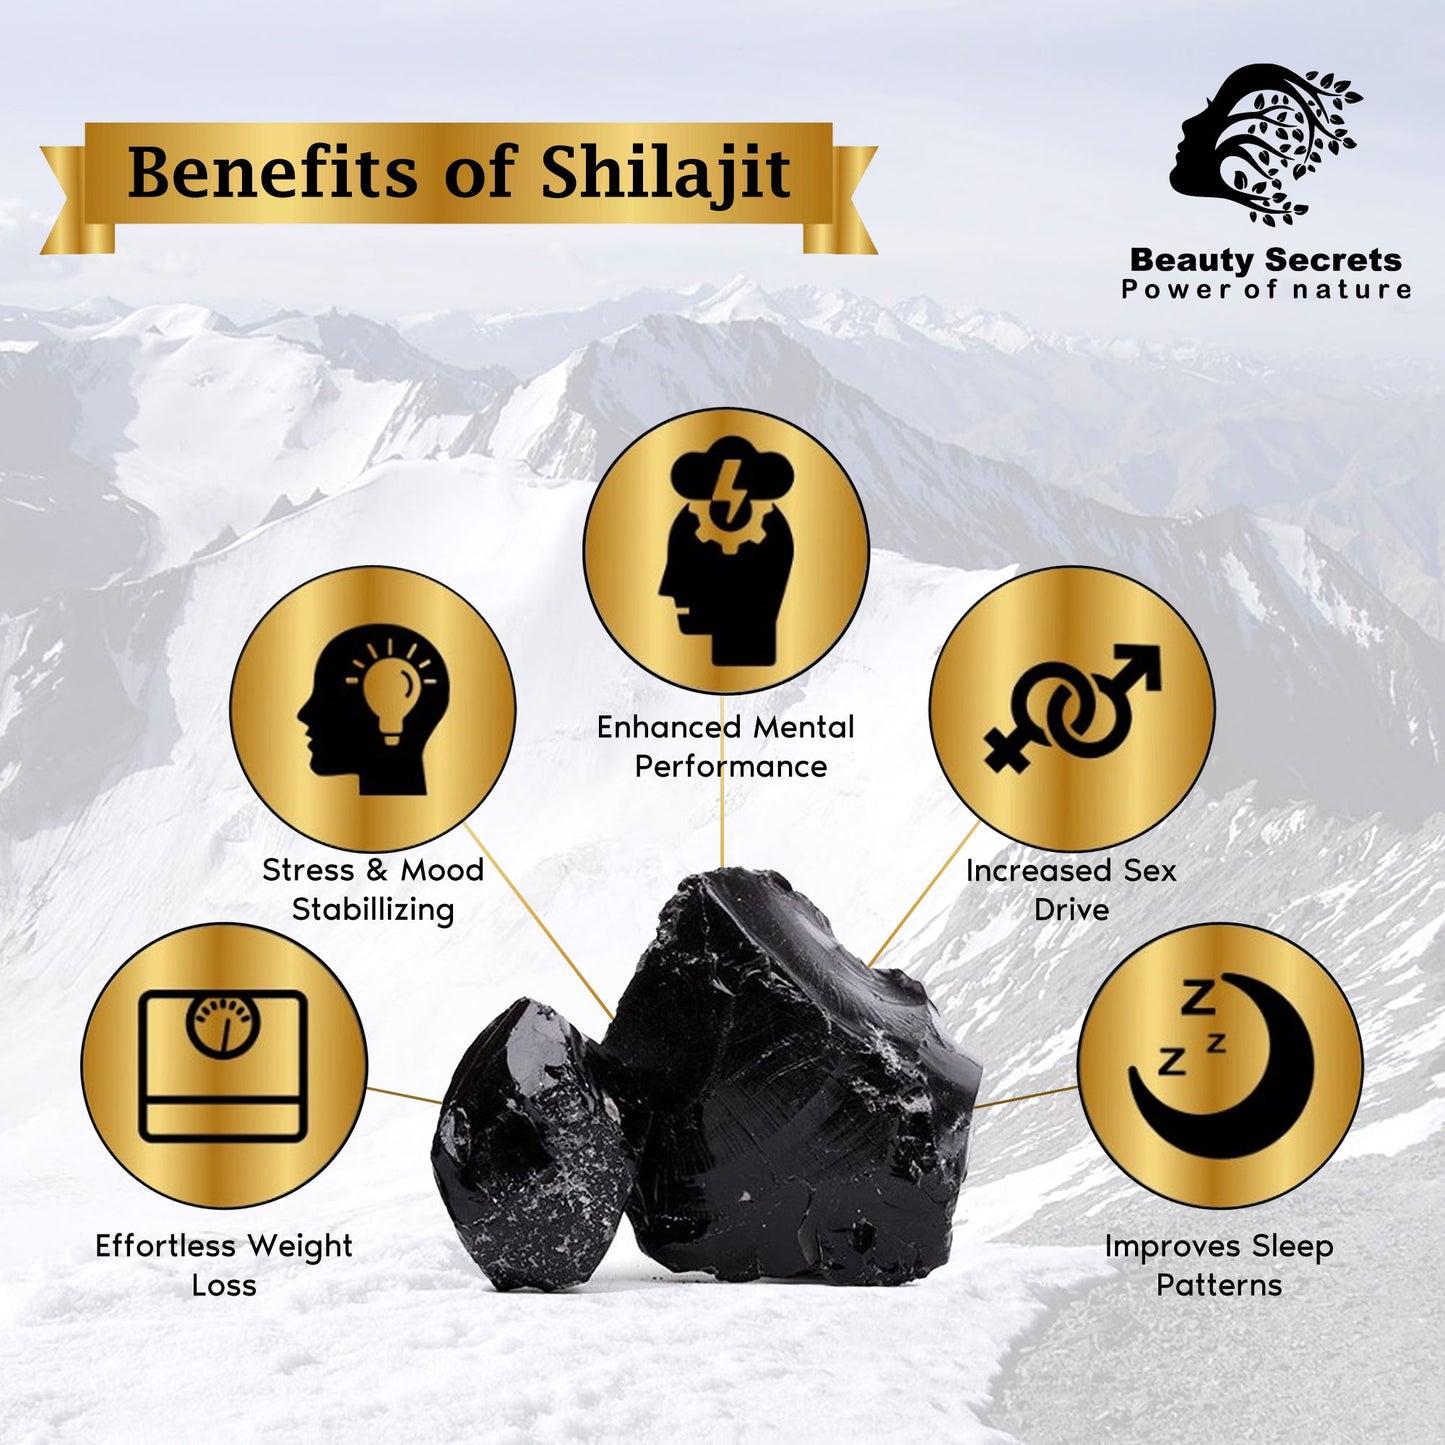 Himalayan Premium Shilajit from Beauty Secrets